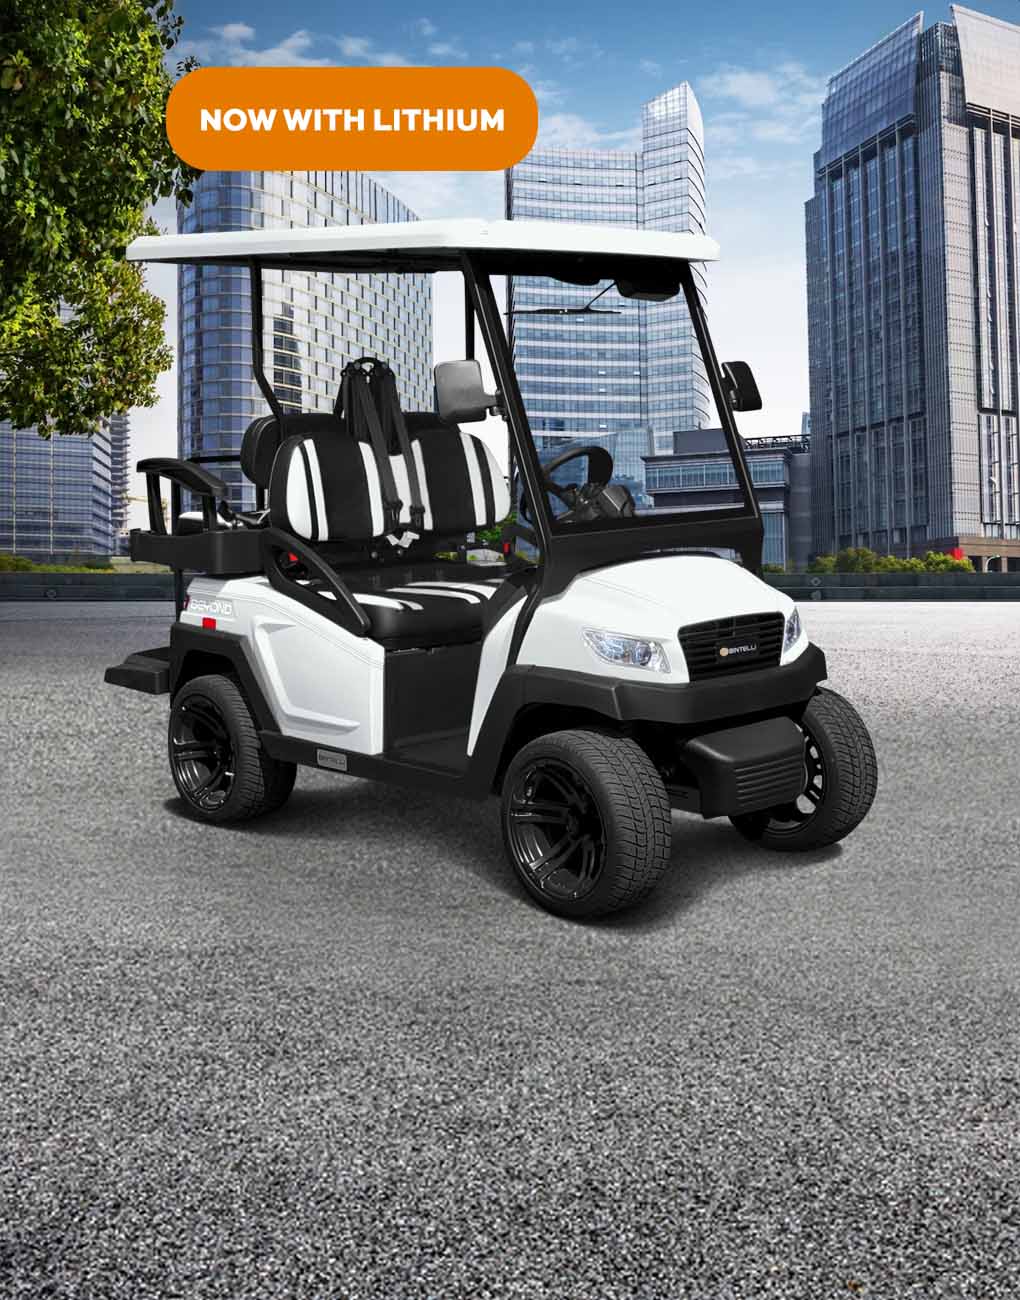 Club Car Models by Year  Golf Carts for Sale in West Palm Beach, FL -  Custom Cart Connection